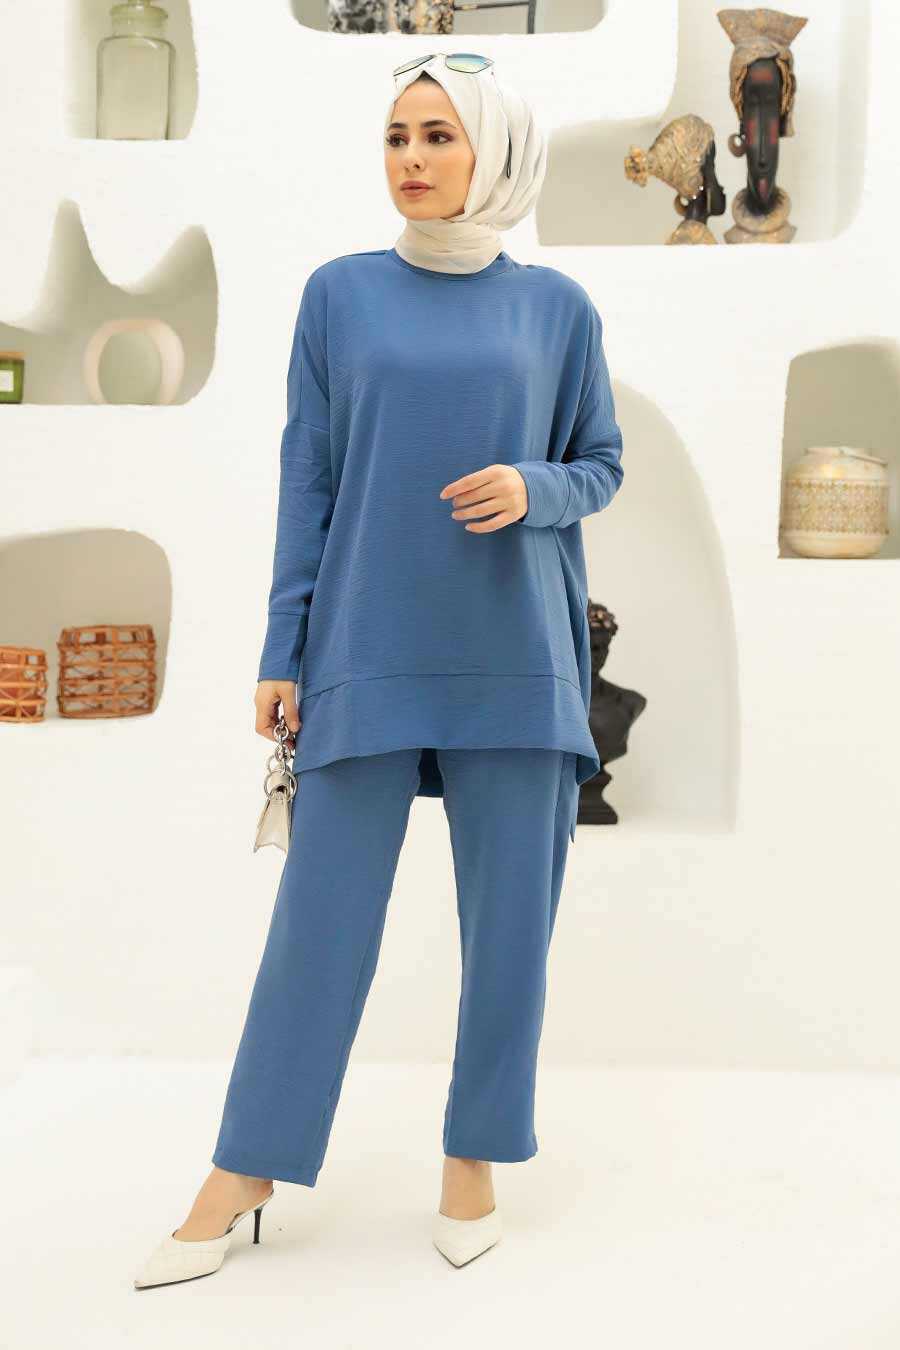 İndigo Blue Hijab Dual Suit Dress 13010IM - Neva-style.com